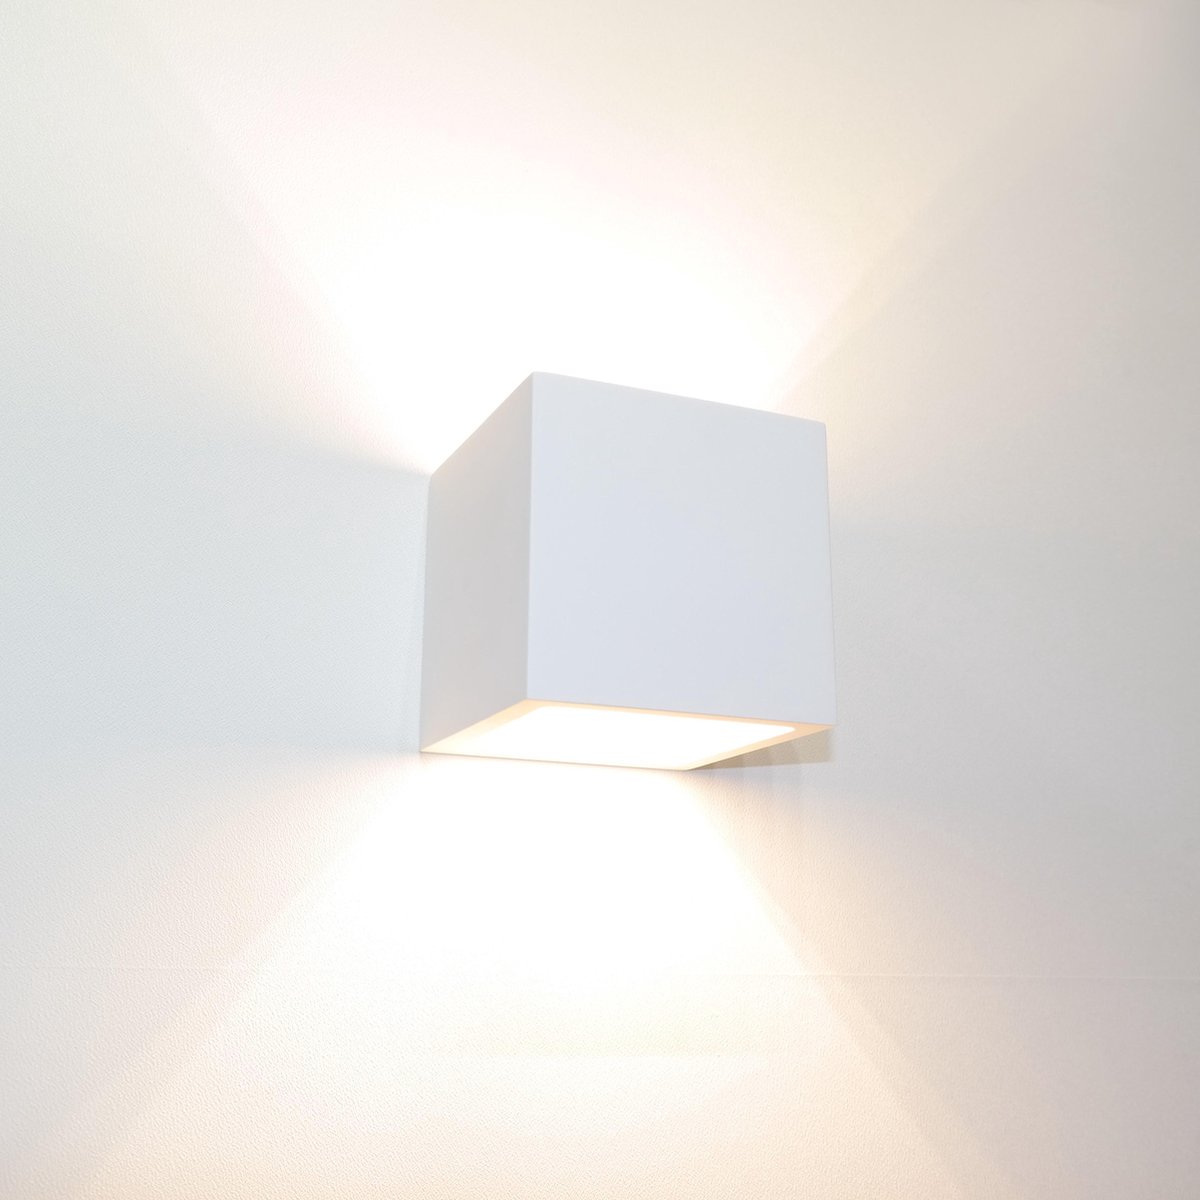 Wandlamp Plaster Vierkant Wit - 10x10x10cm - 1x G9 LED 3,5W 2700K 350lm - IP20 - Gips - Overschilderbaar - Dimbaar > wandlamp binnen wit | wandlamp wit | wandlamp overschilderbaar | wandlamp gips | muurlamp wit | led lamp wit | sfeer lamp wit